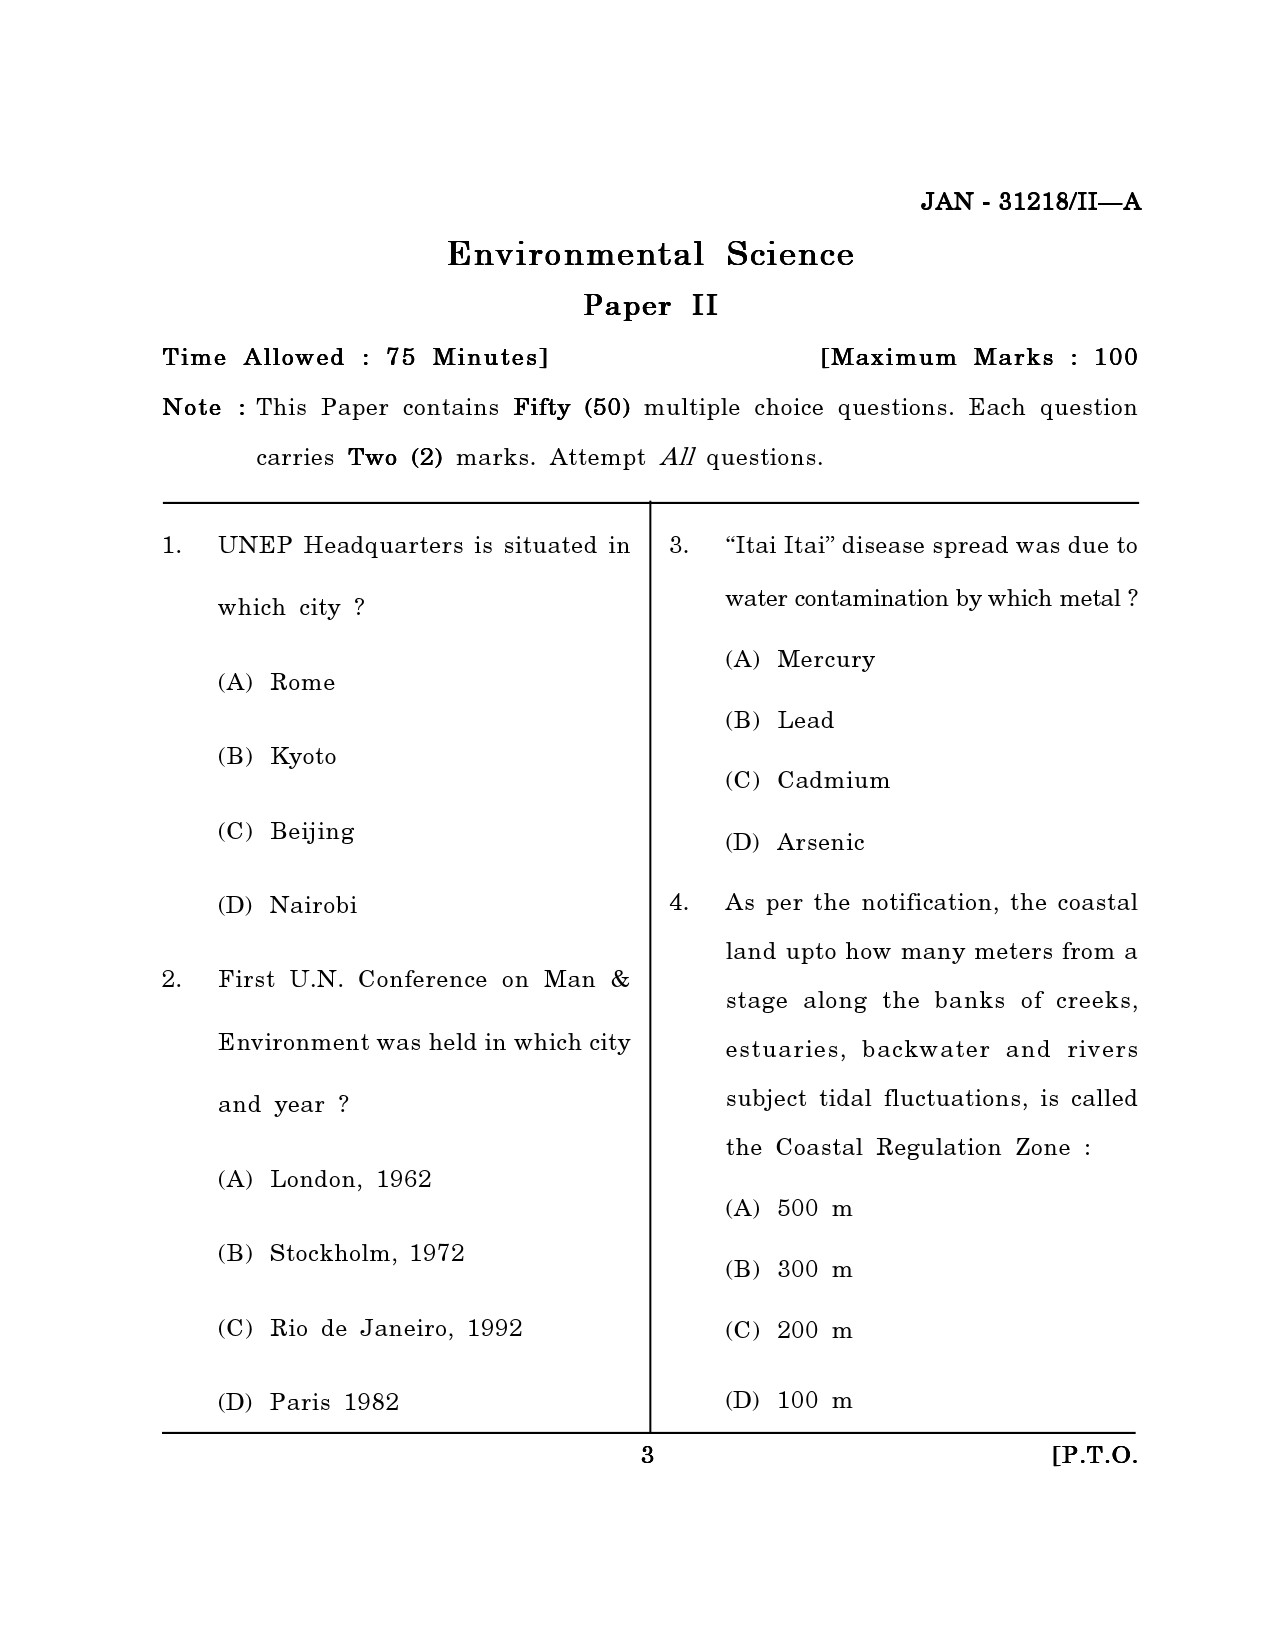 Maharashtra SET Environmental Sciences Question Paper II January 2018 2